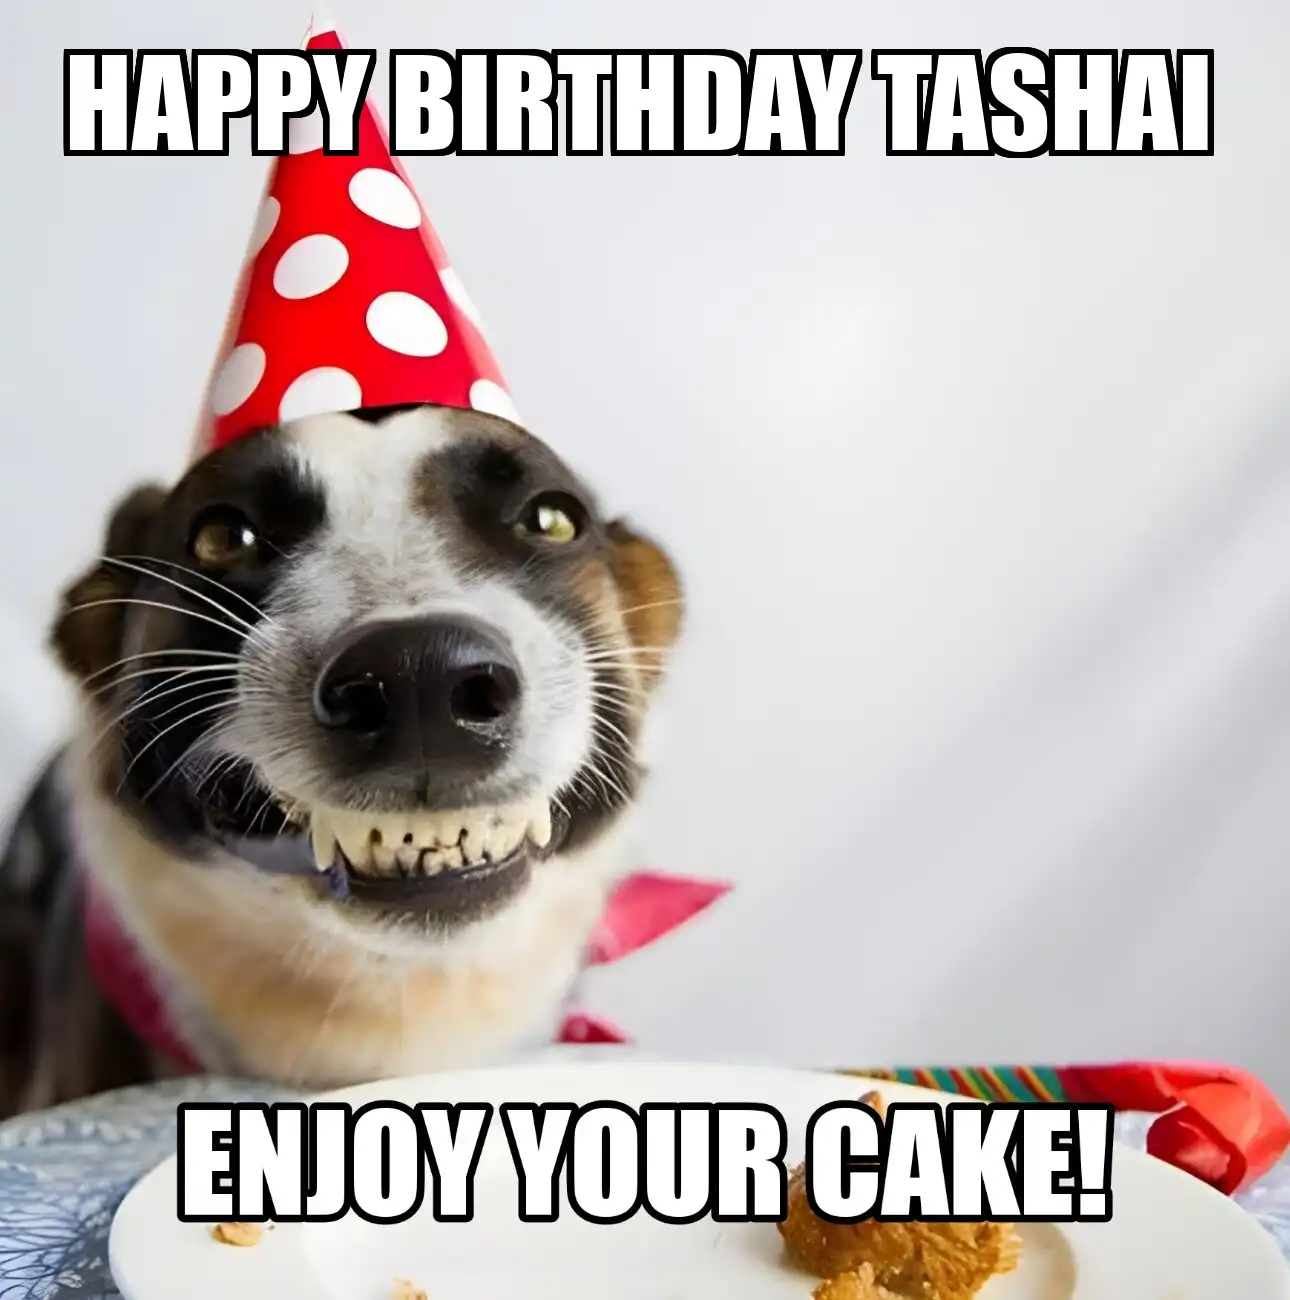 Happy Birthday Tashai Enjoy Your Cake Dog Meme